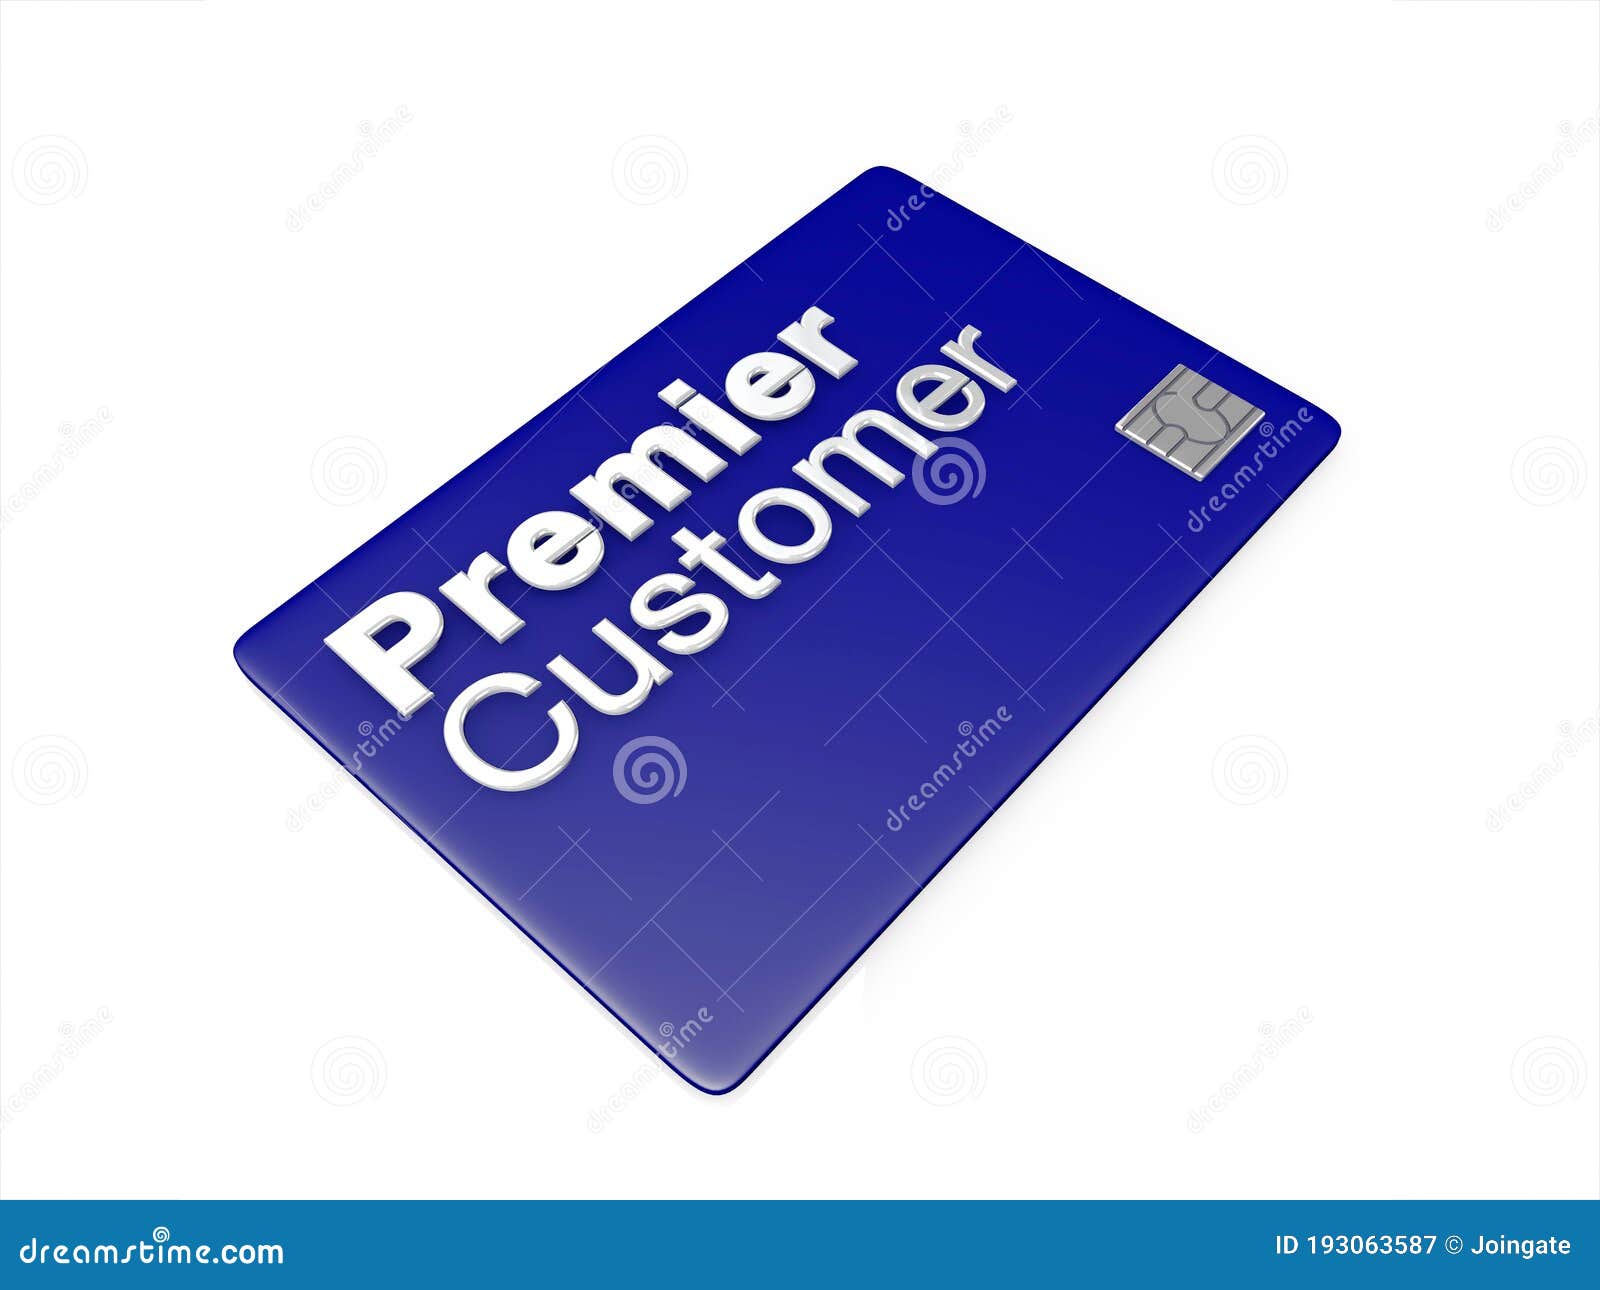 premier customer card